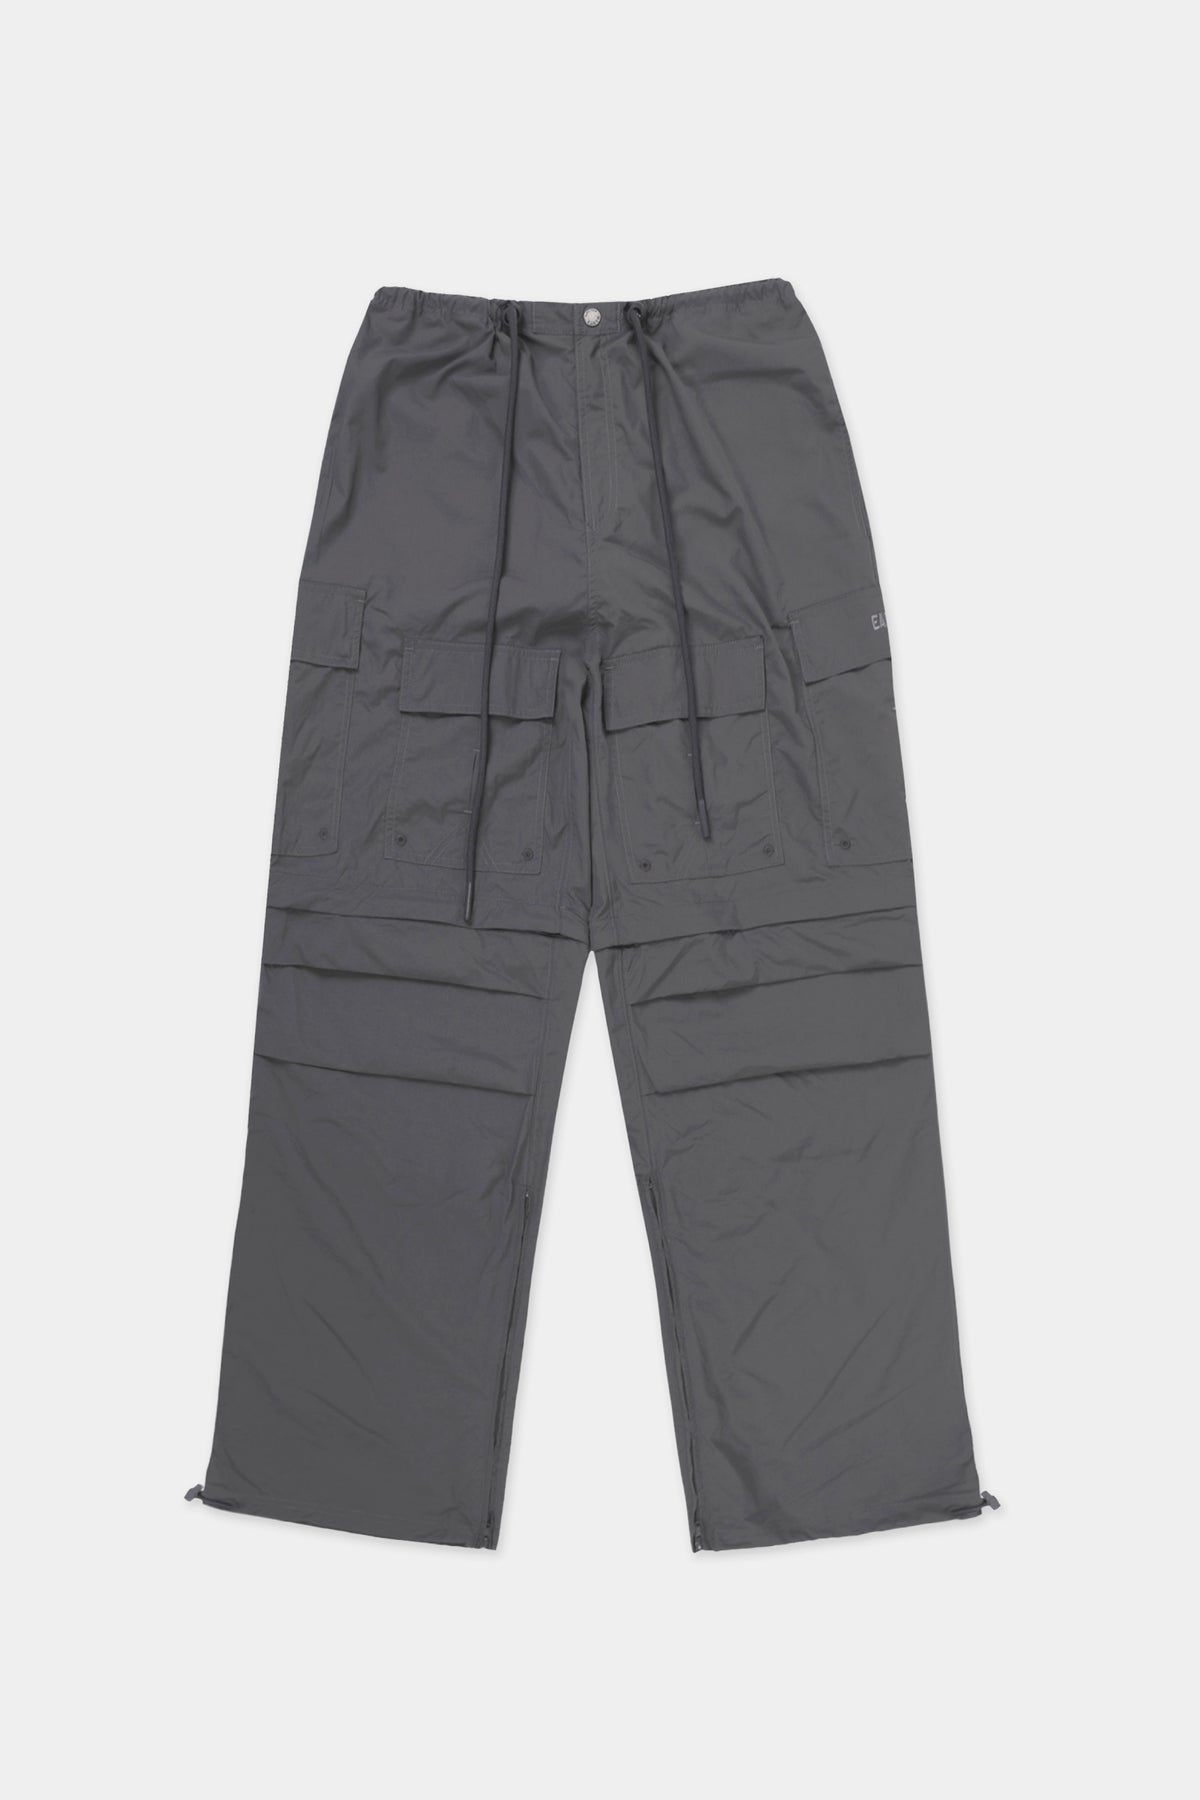 Badblood Delta 2 Parasuit Cargo Trousers (Convertible) Charcoal